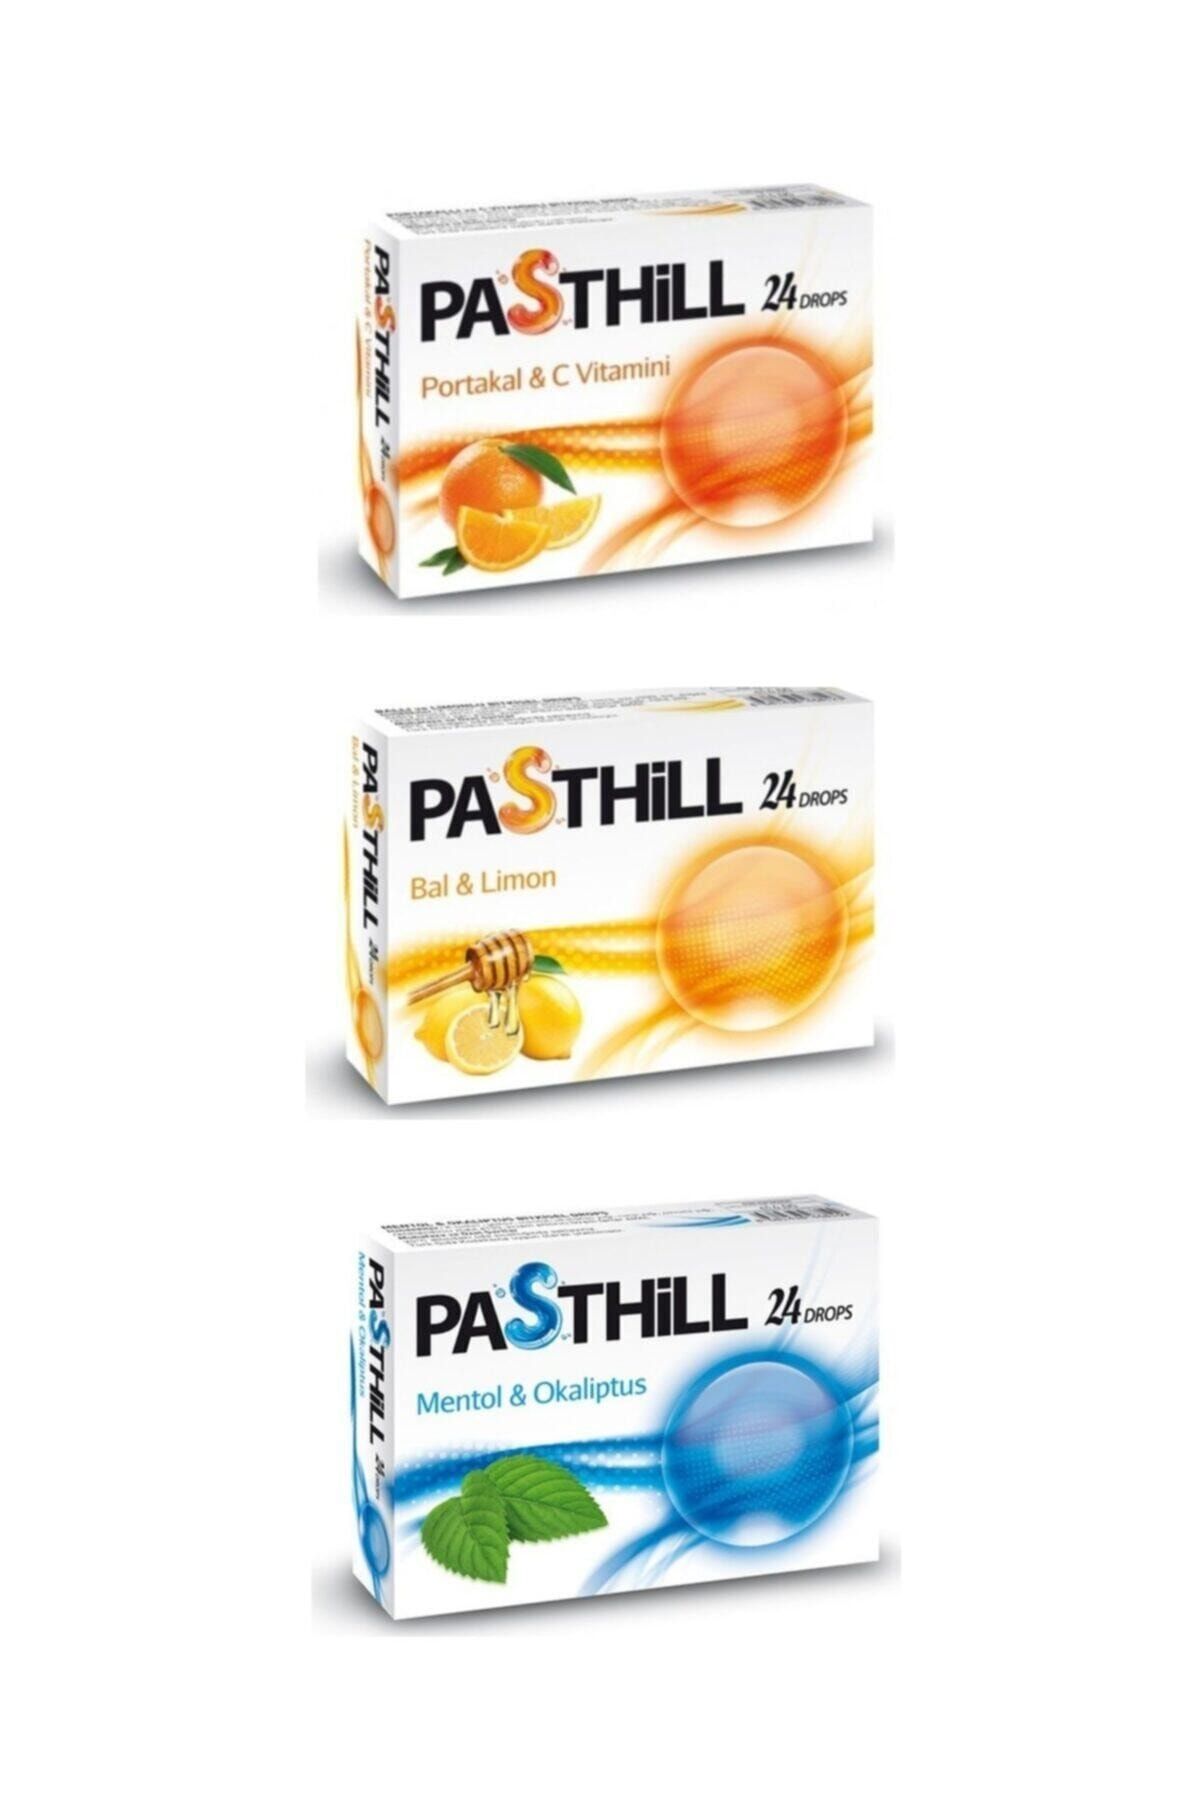 Pasthill 3'ü Bir Arada Portakal  C Vitamini  Mentol Okaliptus  Bal  Limon